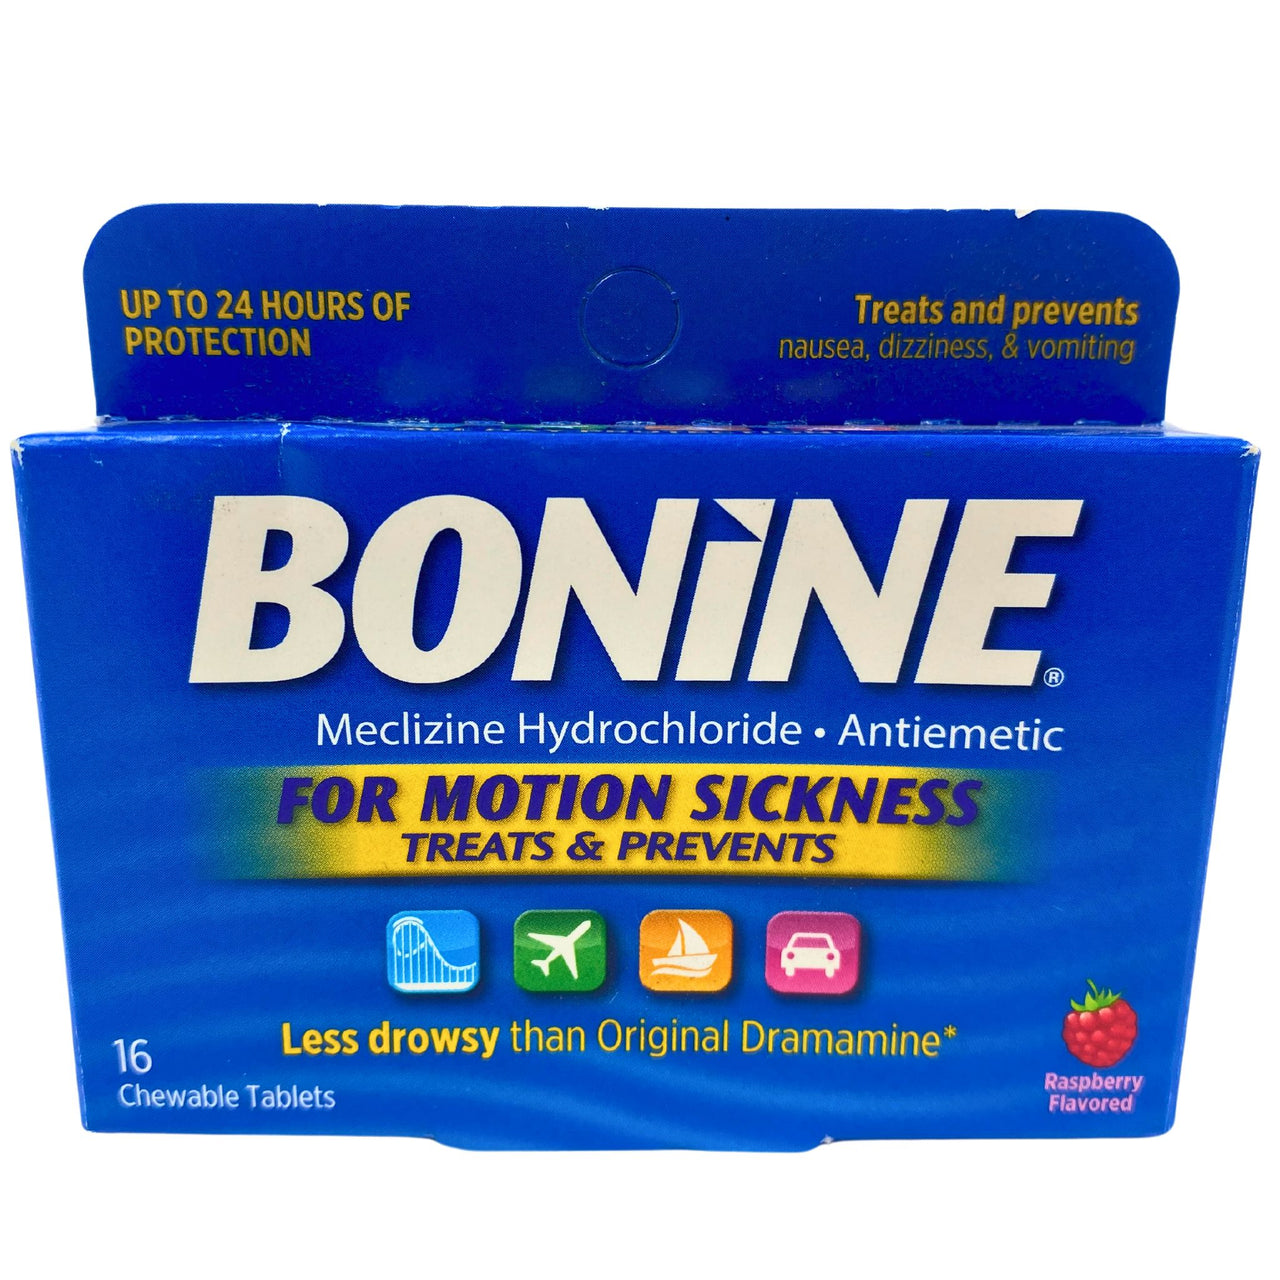 Bonine Meclizine Hydrochloride Antiemetic